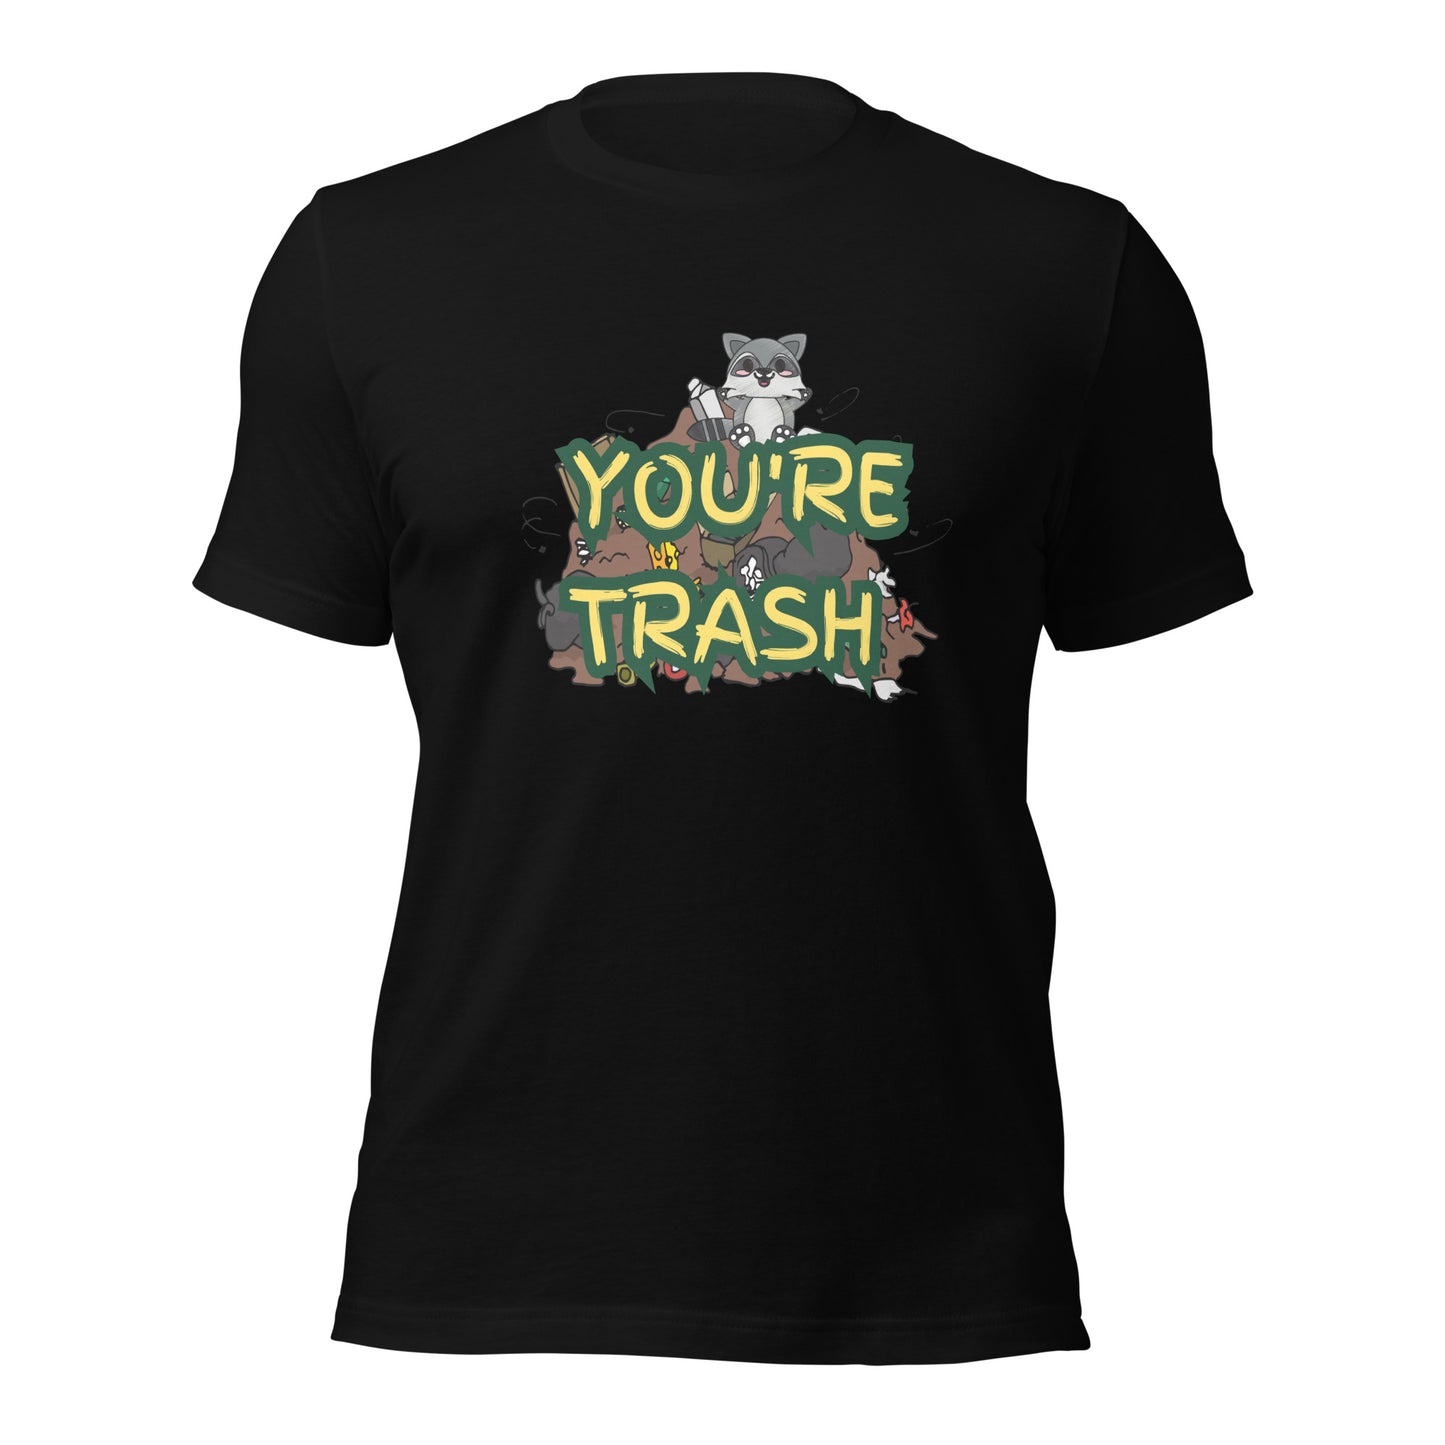 You're Trash